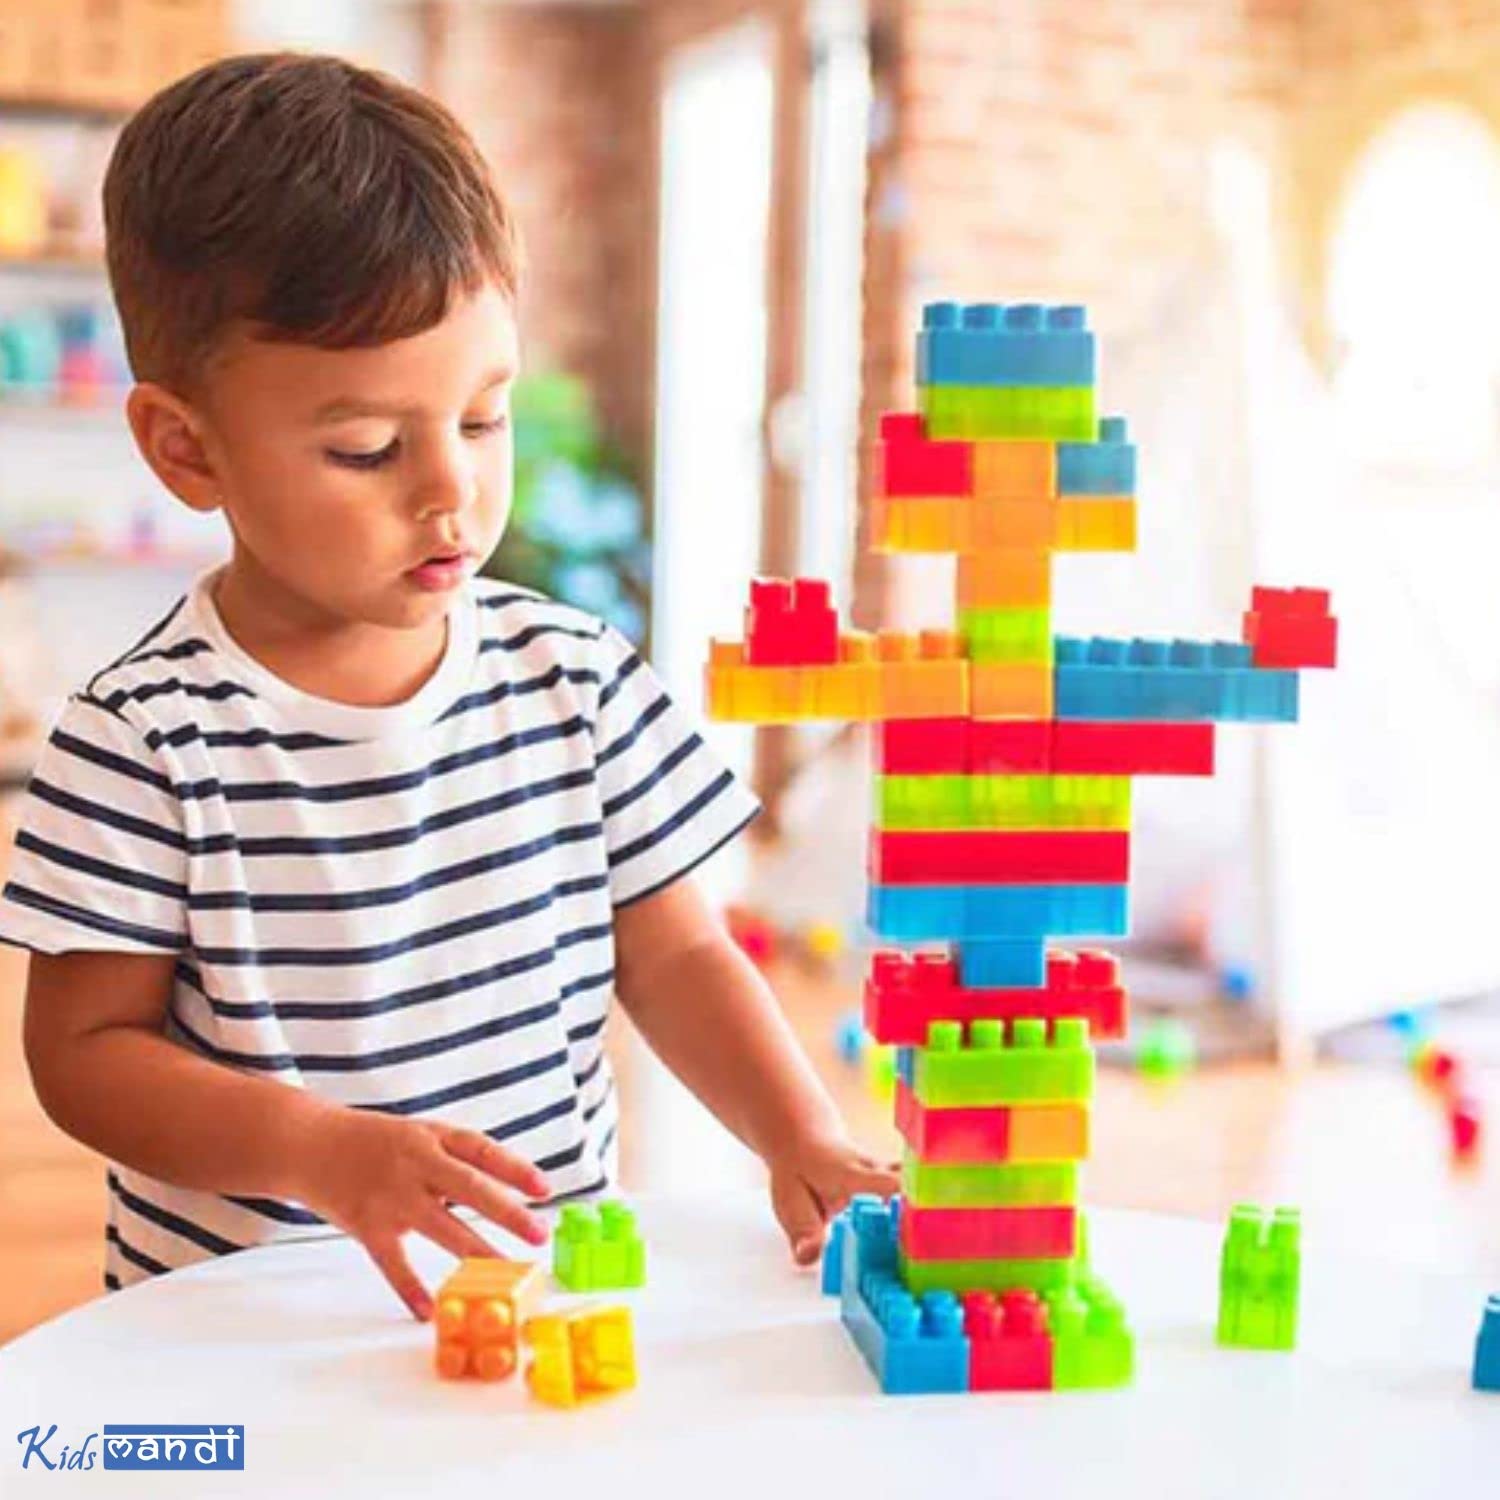 Kids Mandi 60-piece Interlocking Building Blocks Educational Toy Set